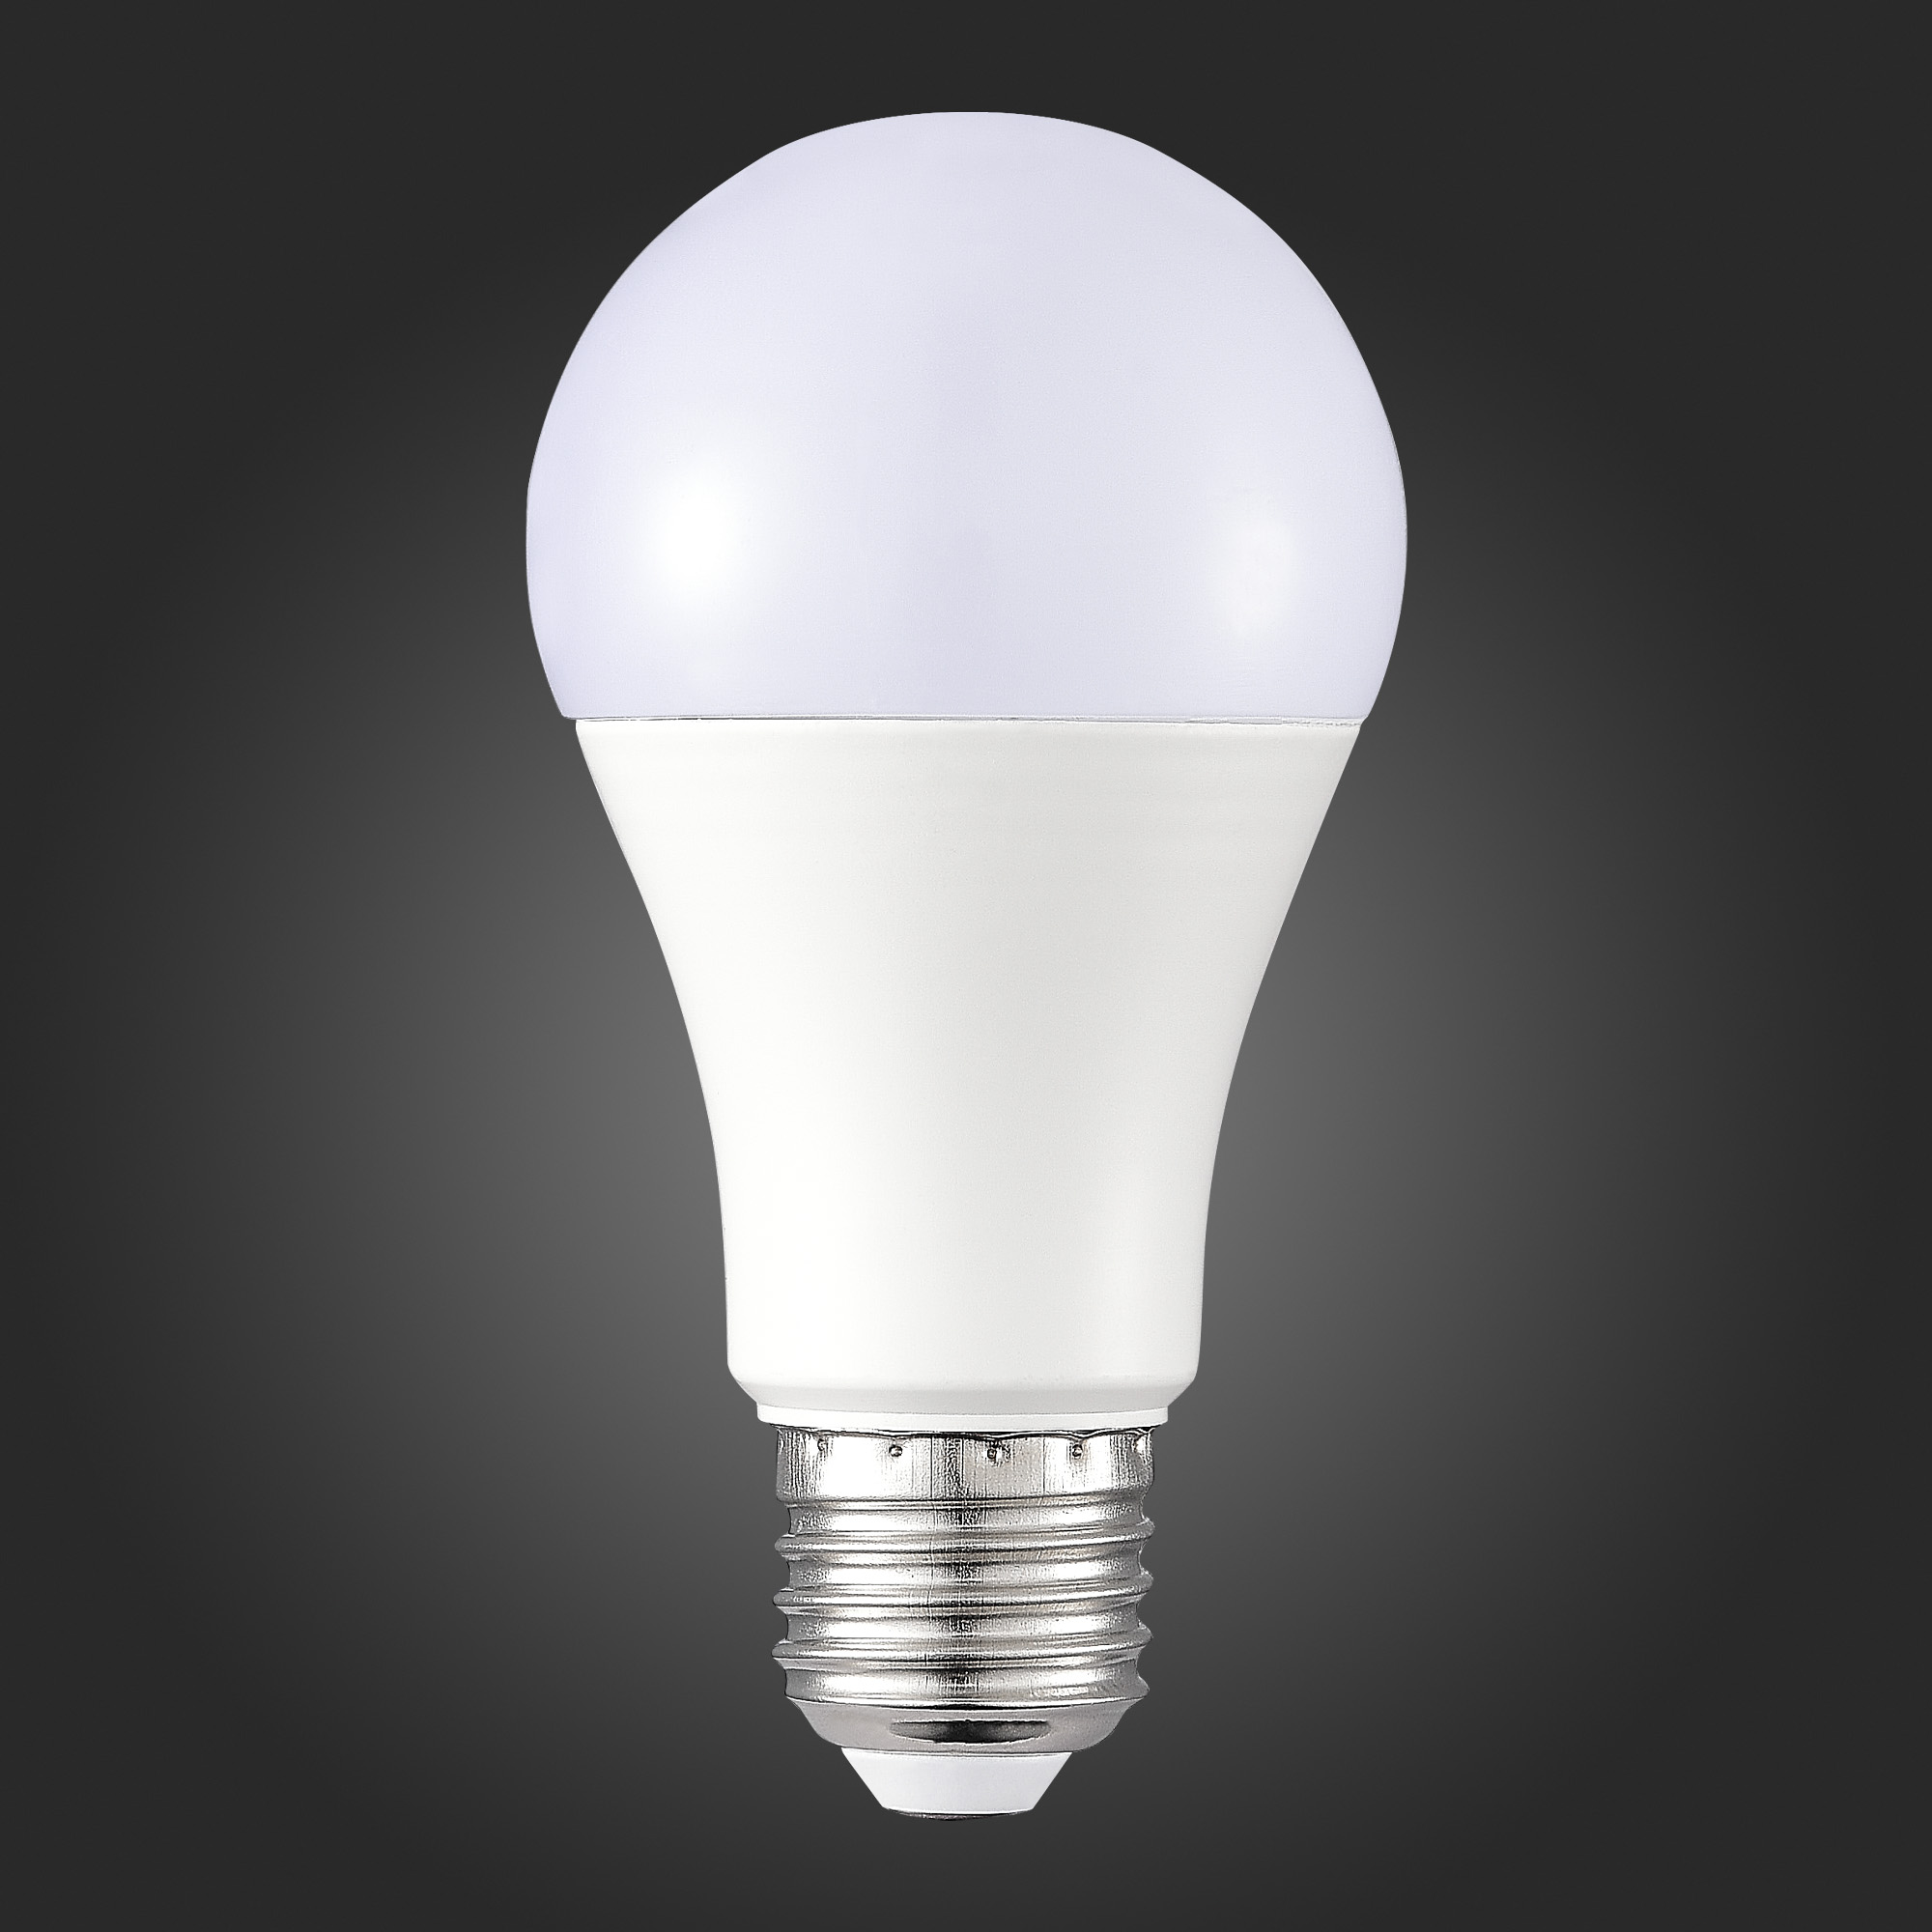 Светодиодная лампа ST Luce 9W 810lm 2700K-6500K E27 ST9100.279.09, цвет белый - фото 3